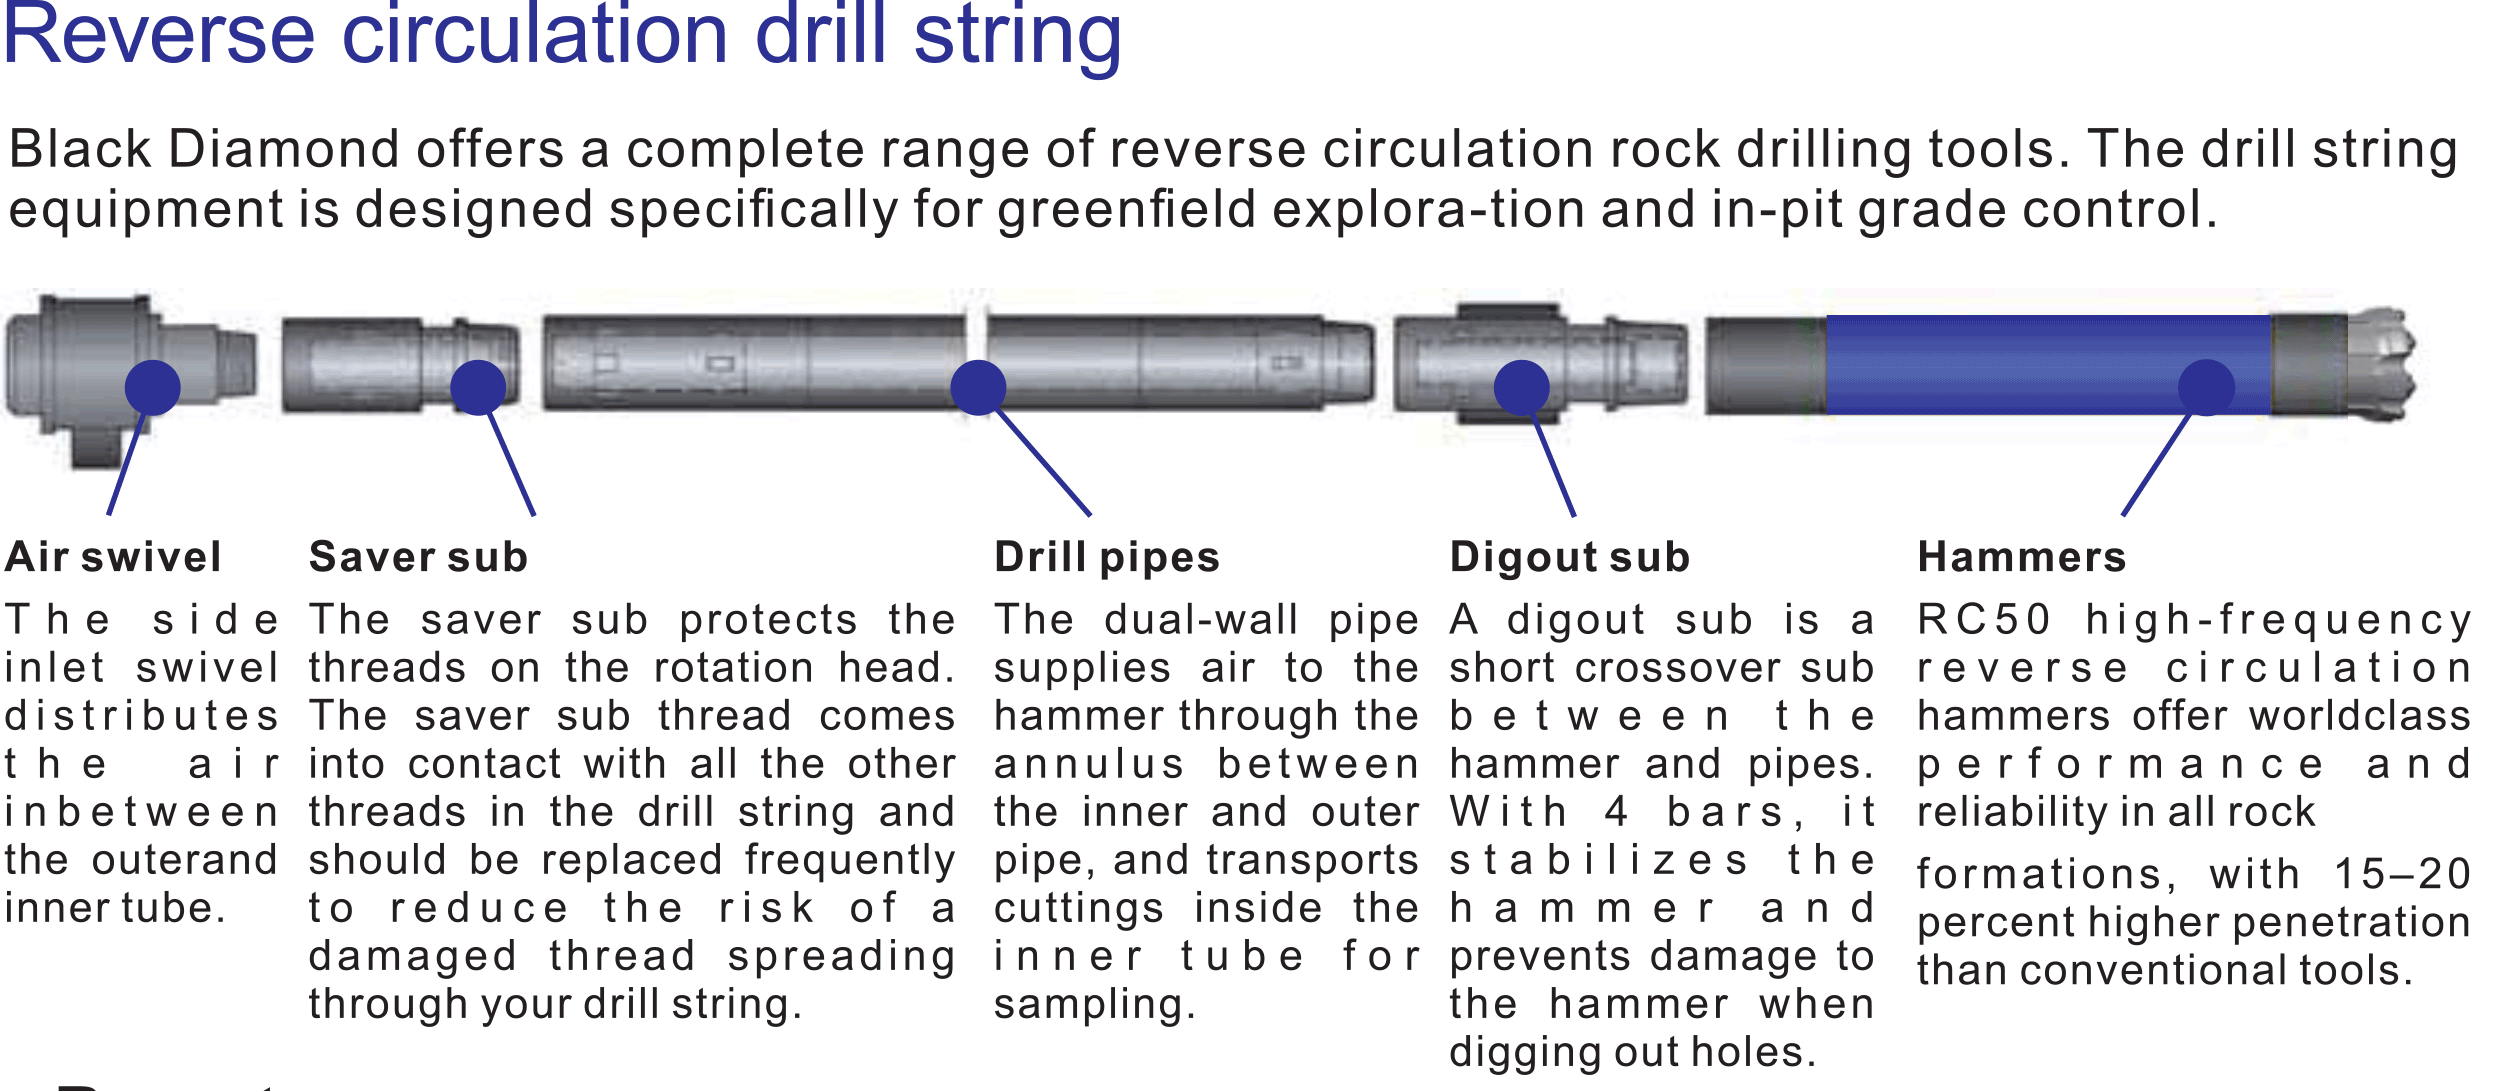 Black Diamond Drilling RC Reverse Circulation Drill String Information